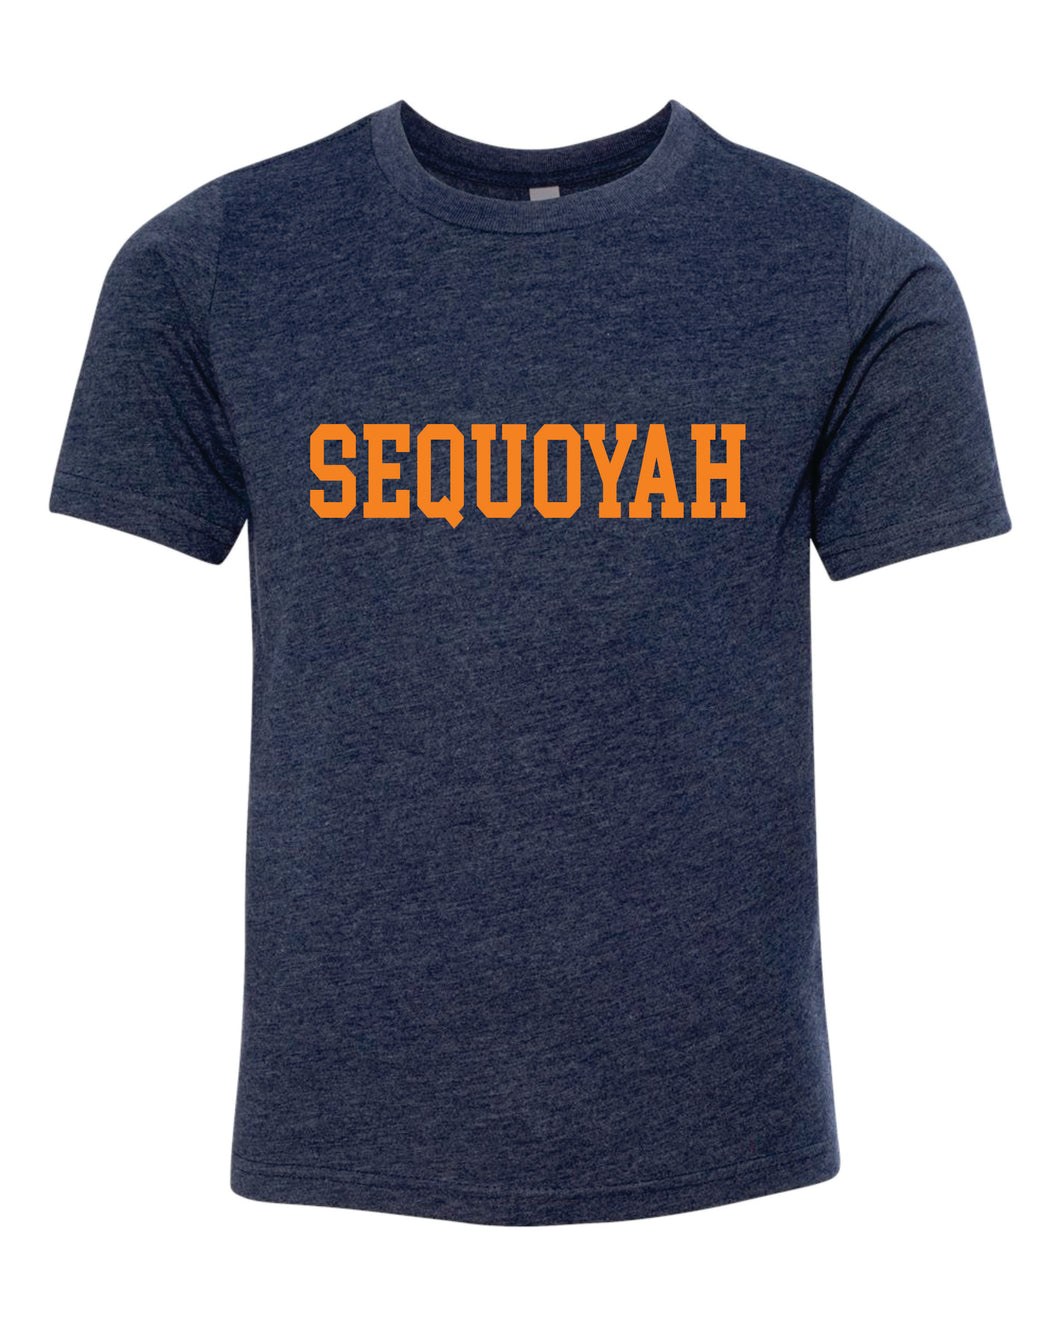 Sequoyah Vols on Heathered Navy Short Sleeve Shirt